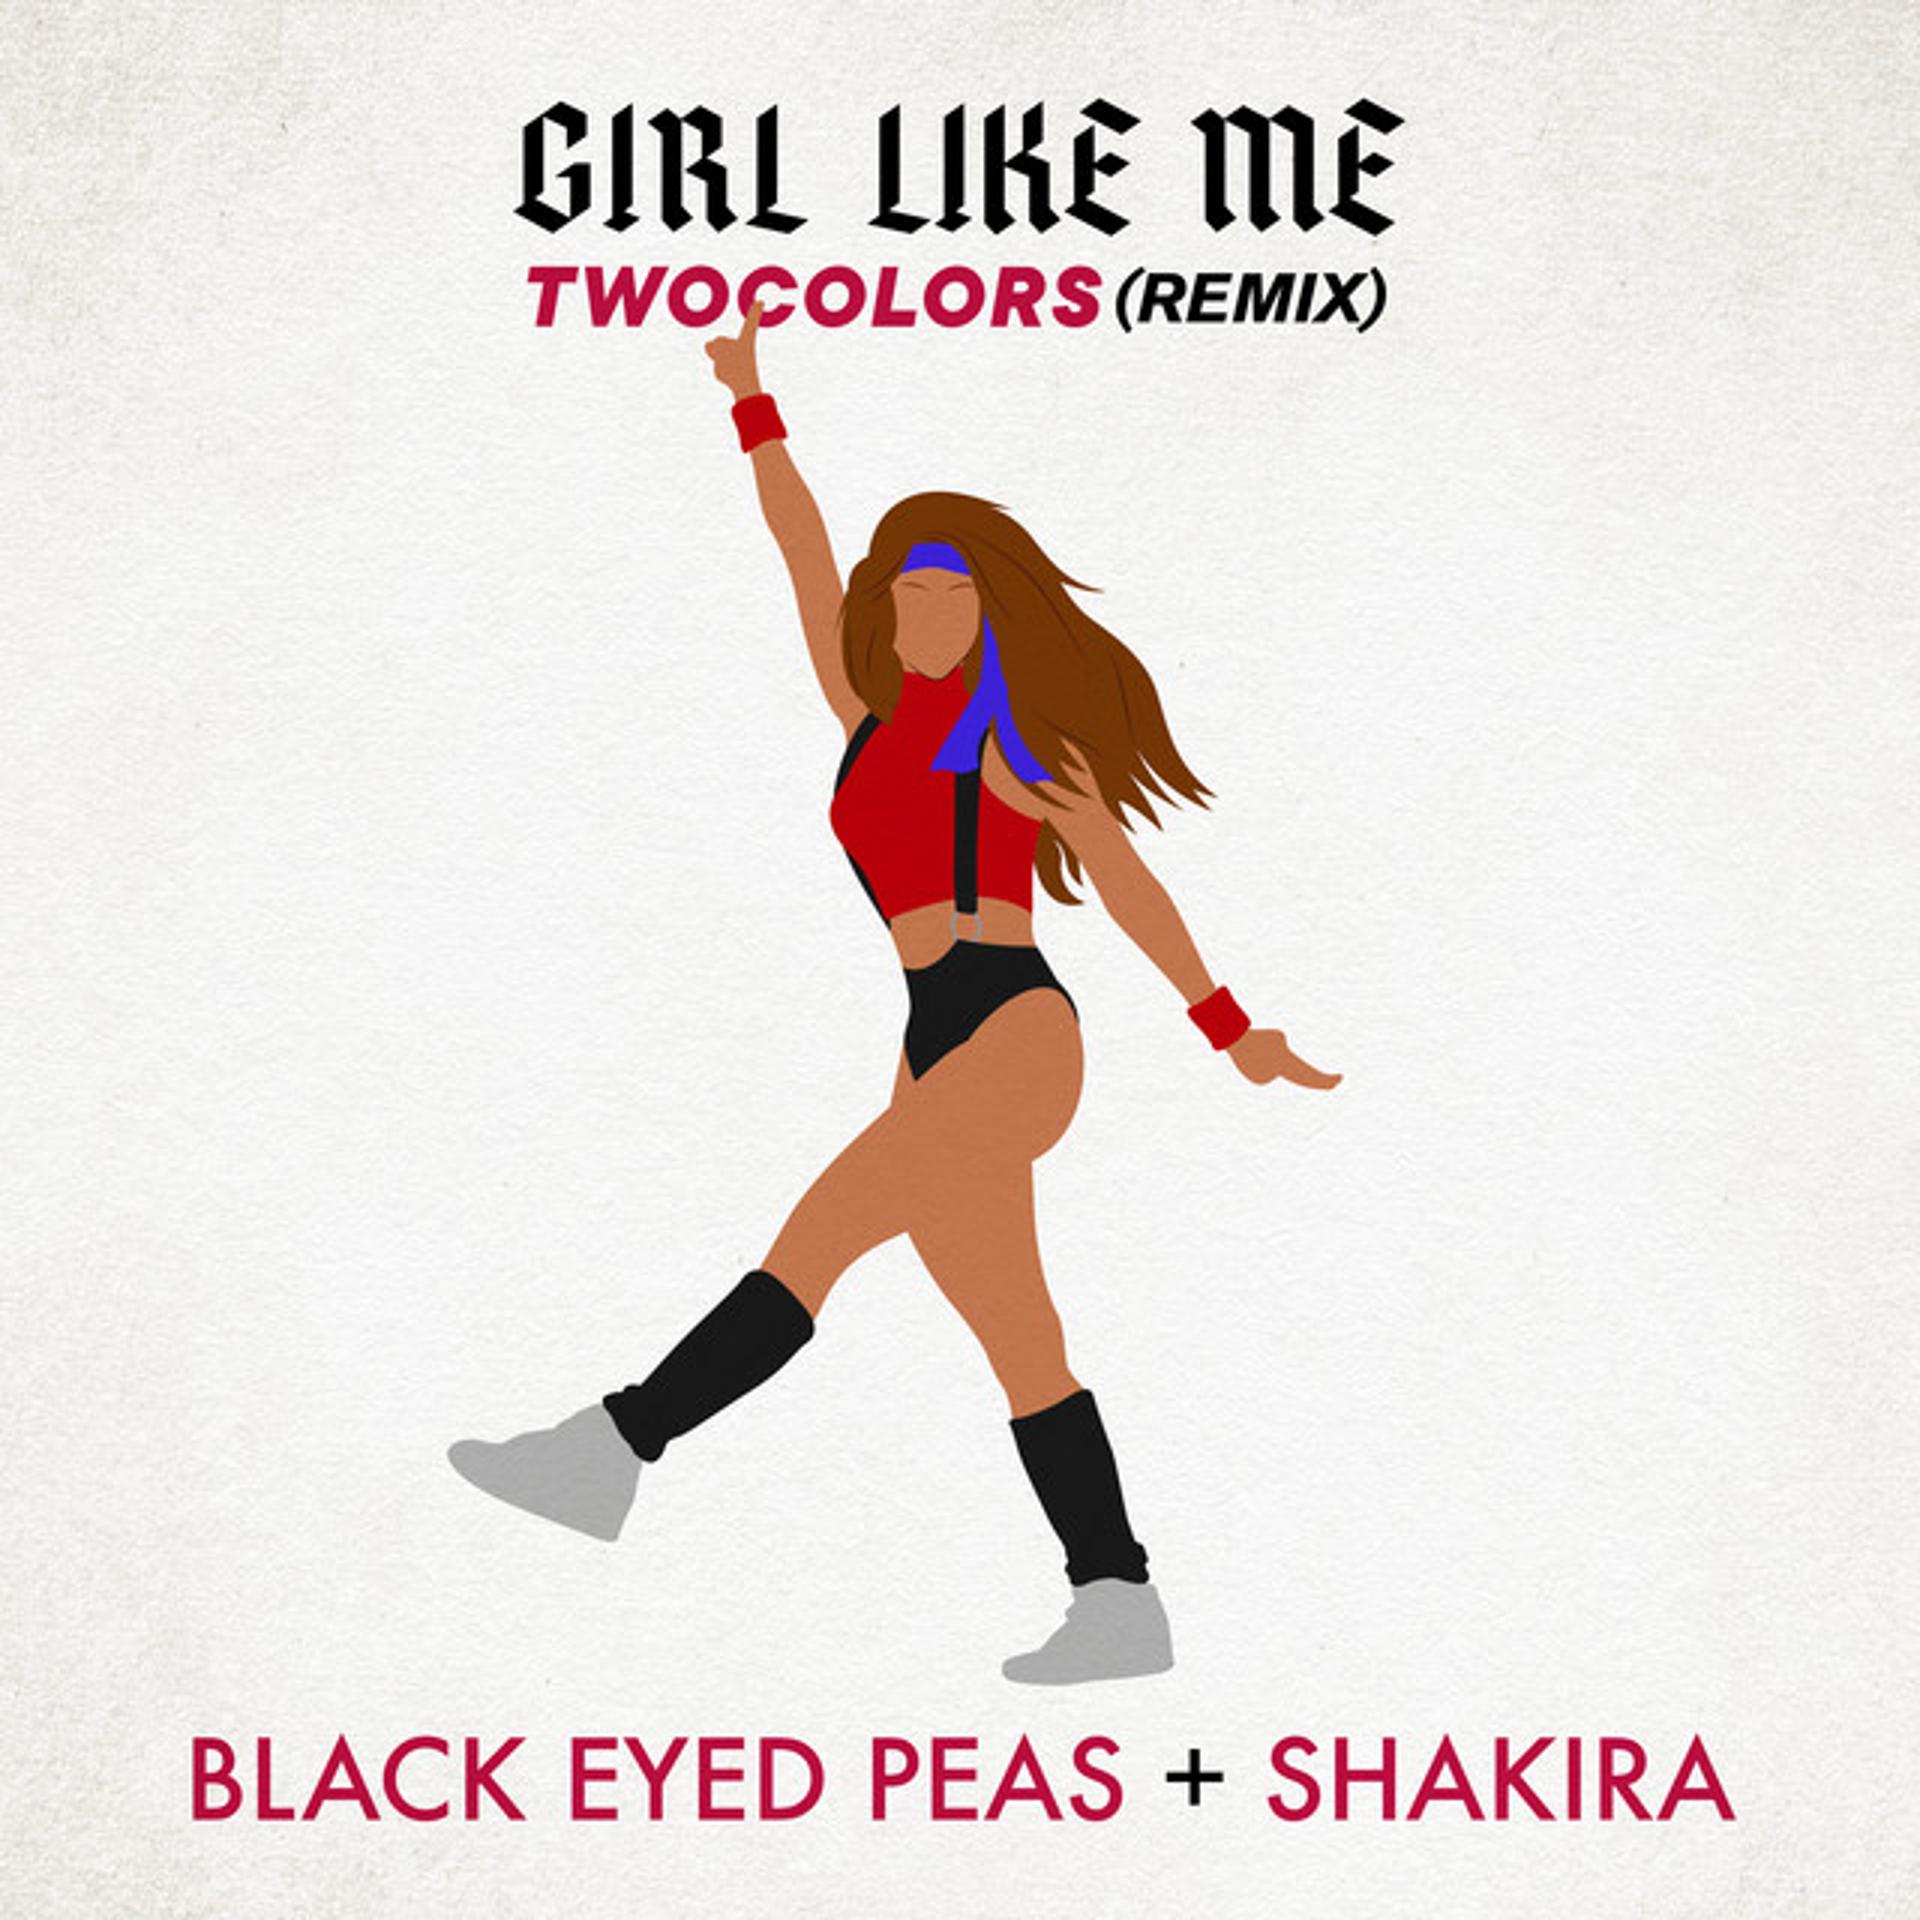 Black eyed Peas, Shakira - girl like me. Black eyed Peas, Shakira & TWOCOLORS. Black eyed Peas girl. I like pretty like a girl